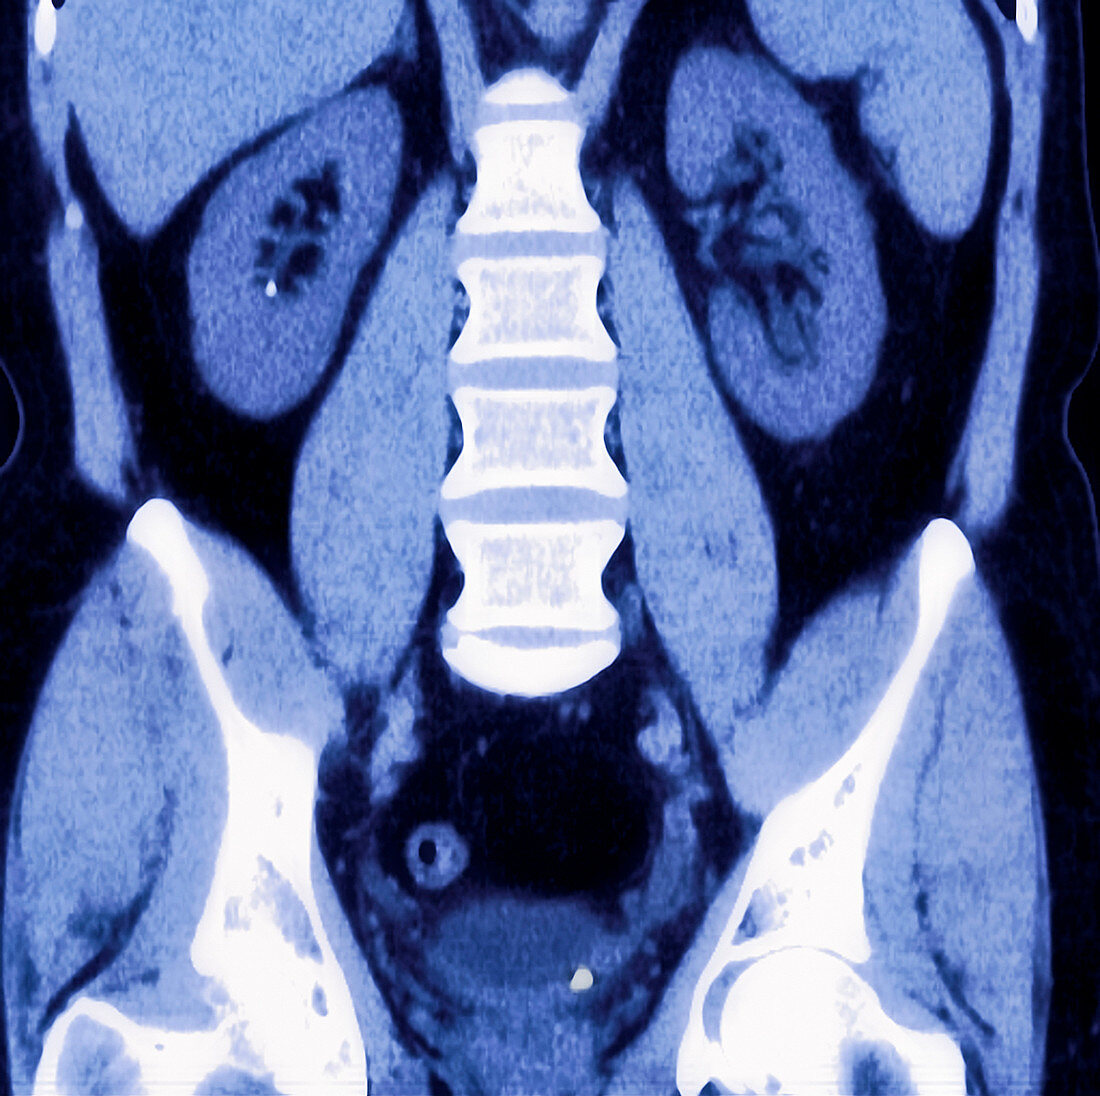 Kidney stone,MRI scan